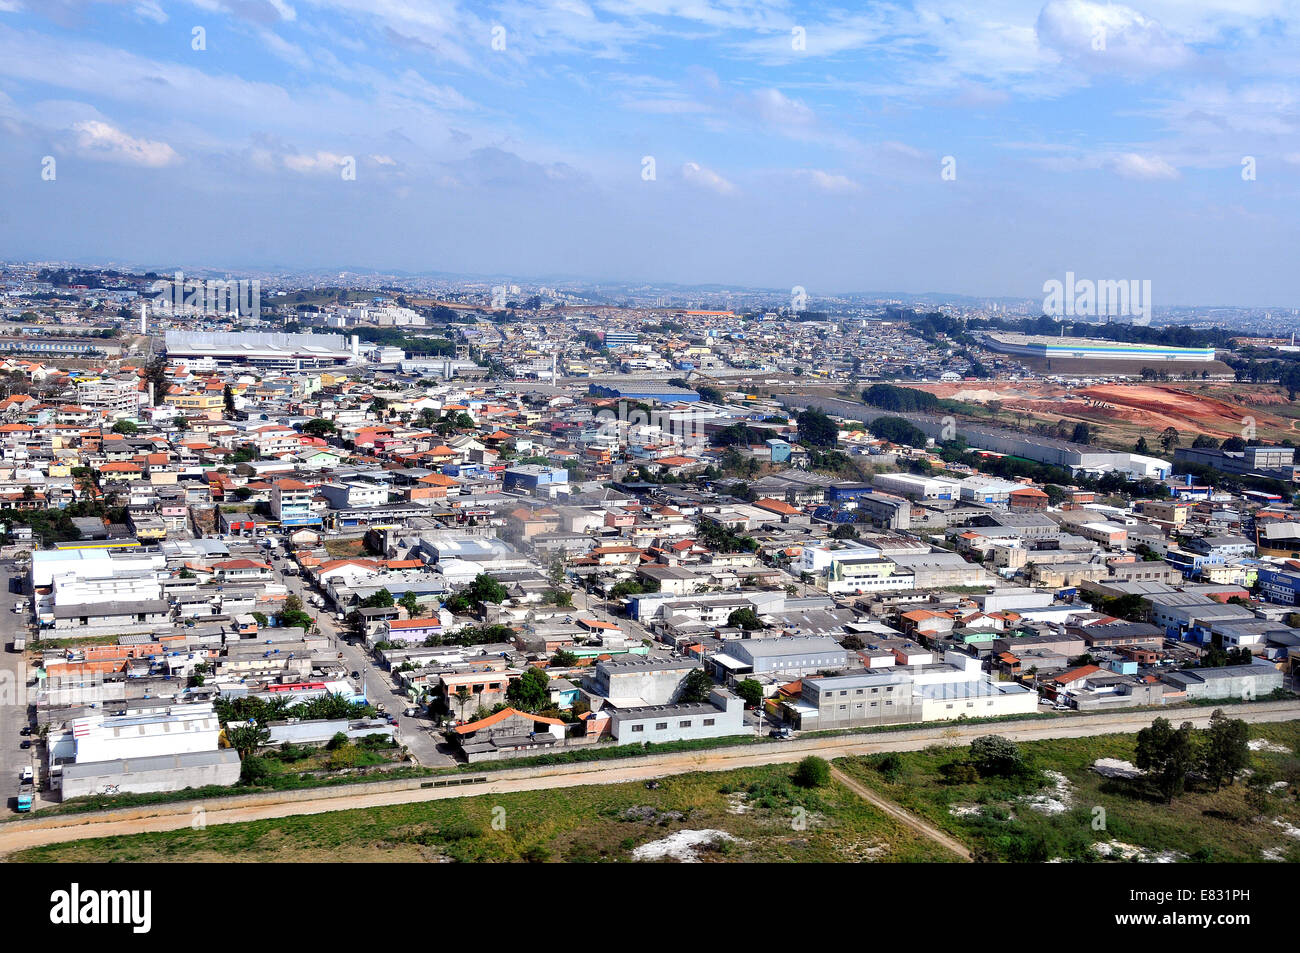 Industriegebiet in der Nähe Guarulhos Flughafen Sao Paulo Brasilien Stockfoto